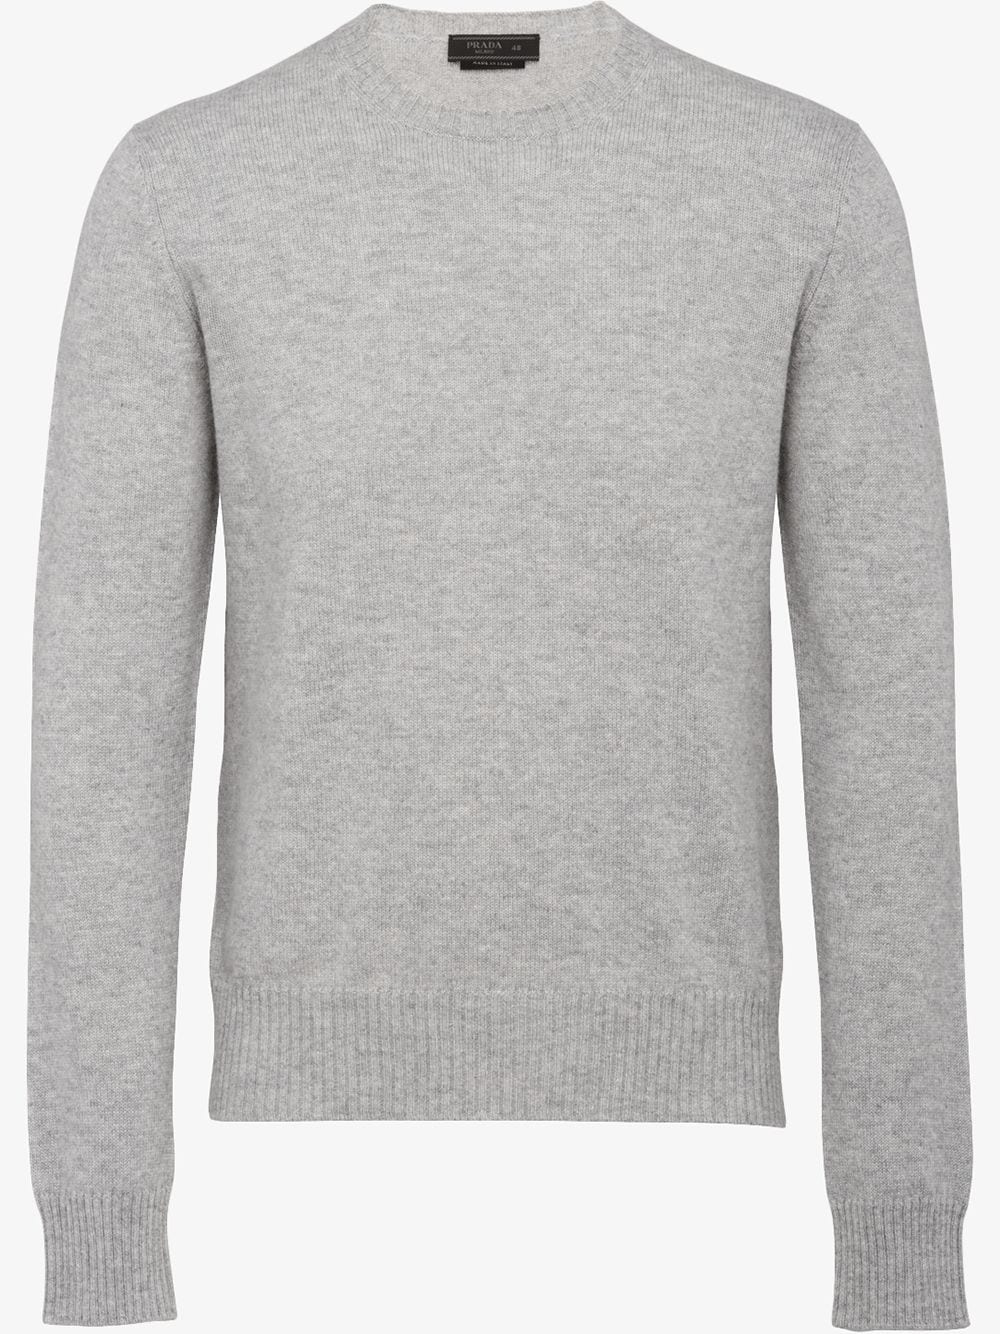 Prada crew neck sweater - Grey von Prada